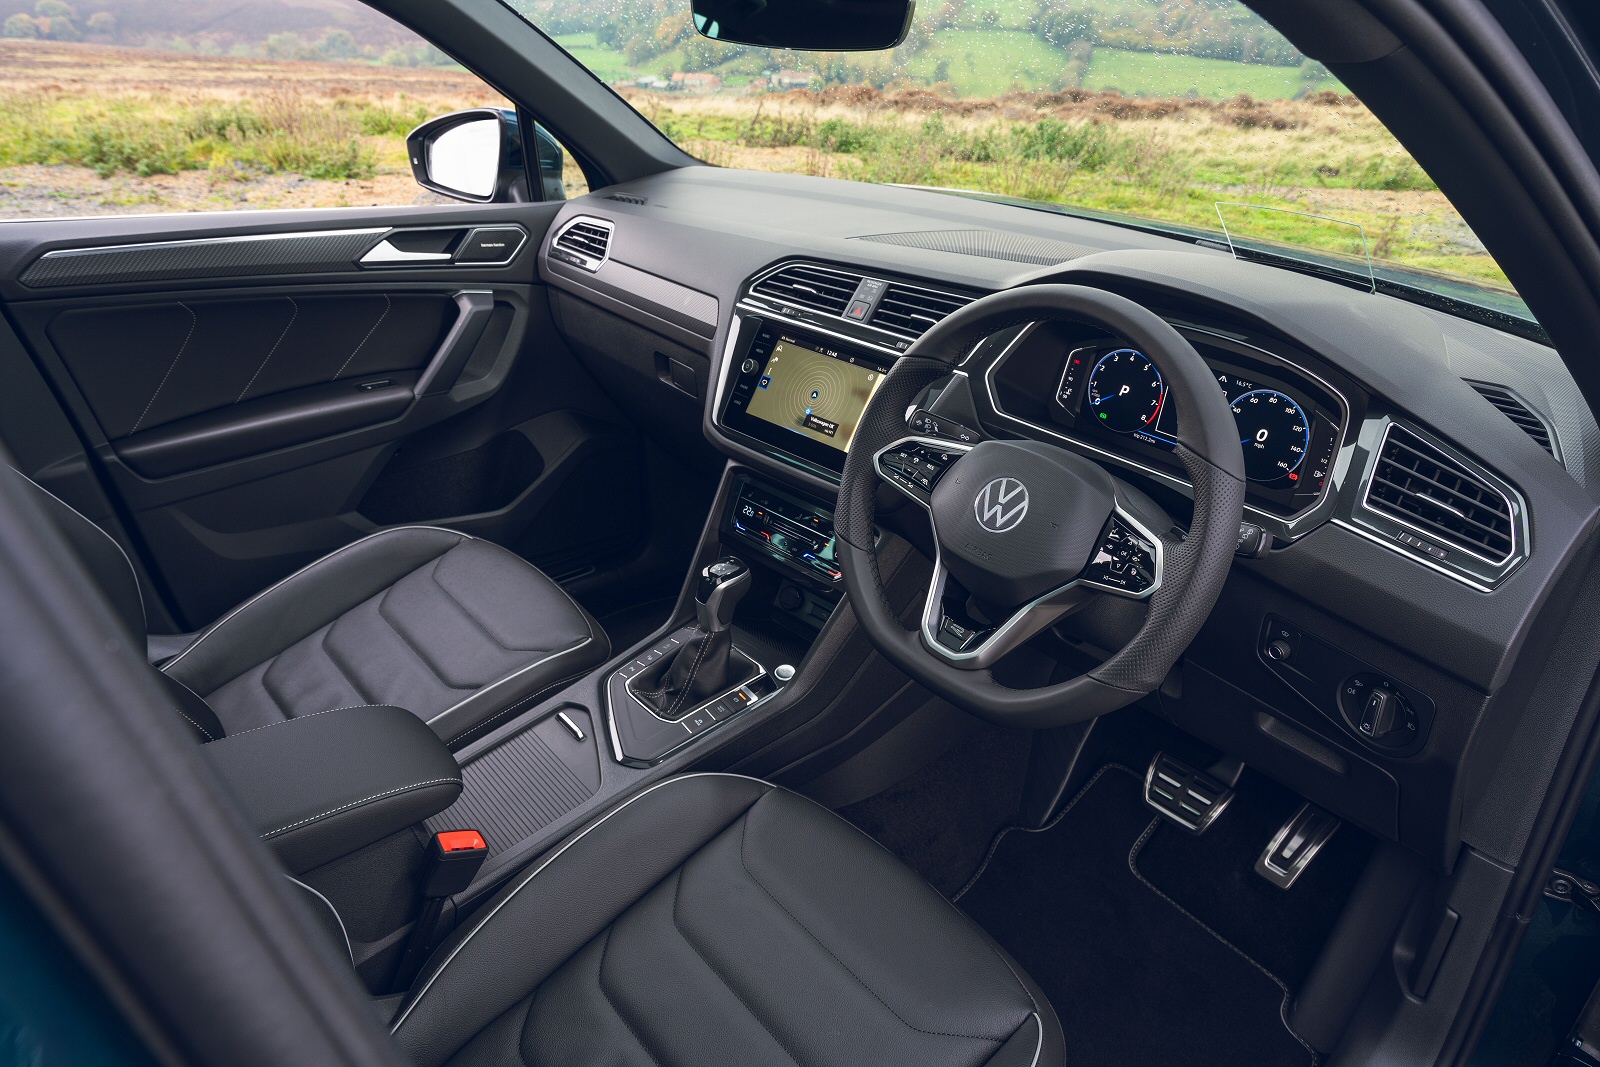 Volkswagen TIGUAN DIESEL ESTATE 2.0 TDI Elegance 5dr DSG